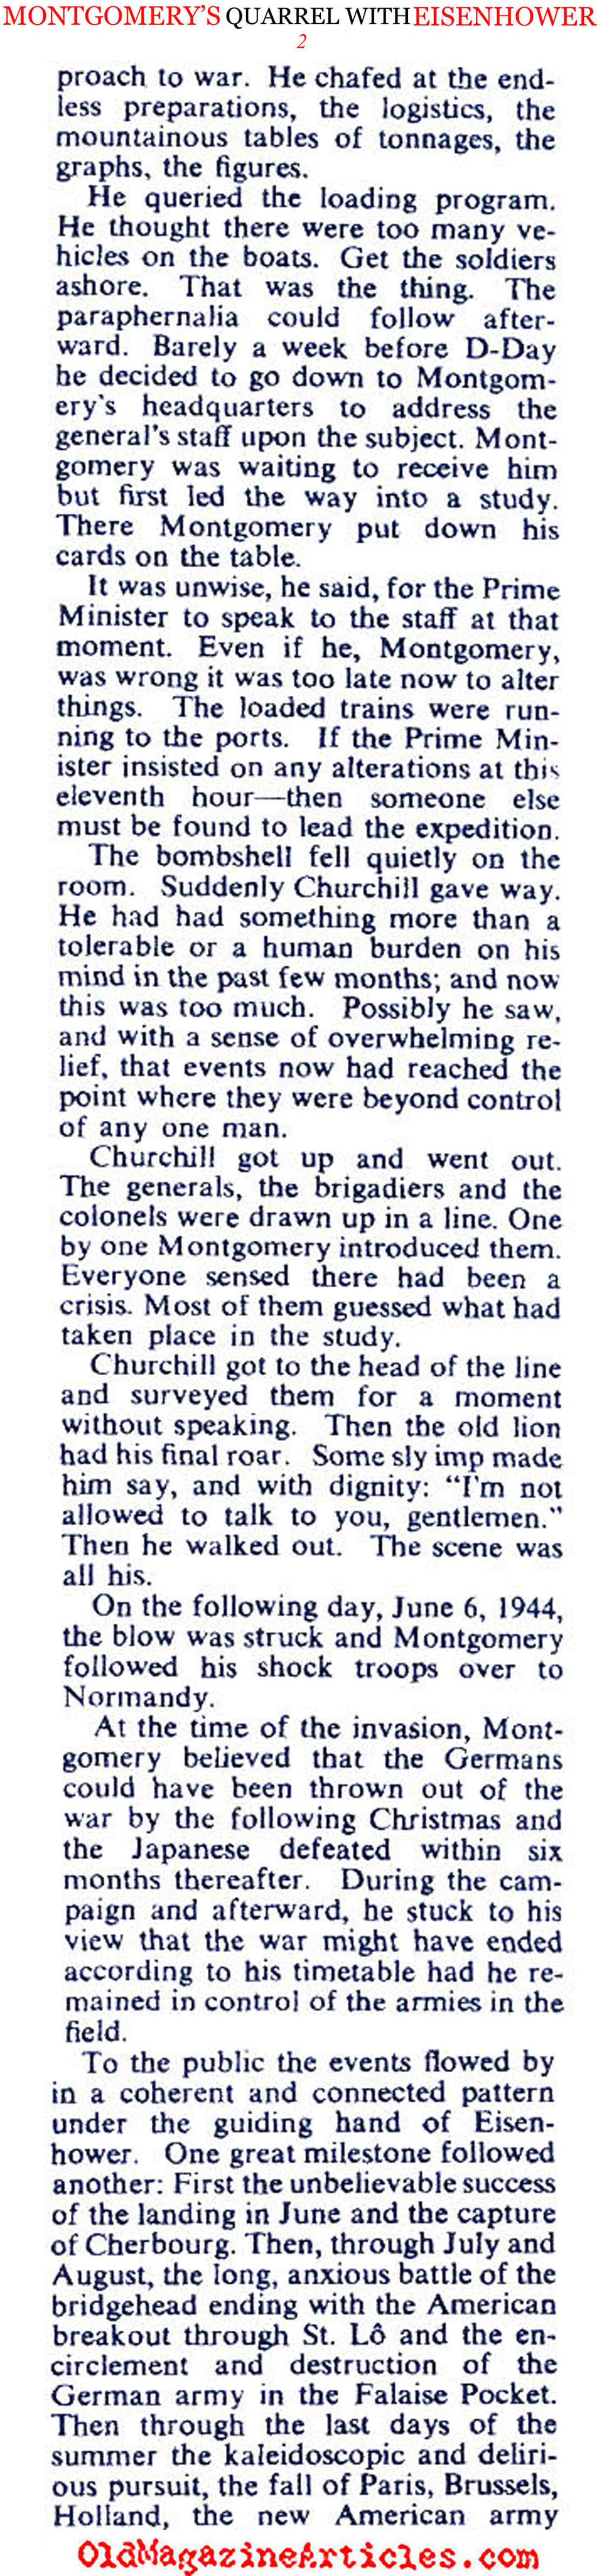 Montgomery's Quarrel with Eisenhower (Collier's Magazine, 1946)